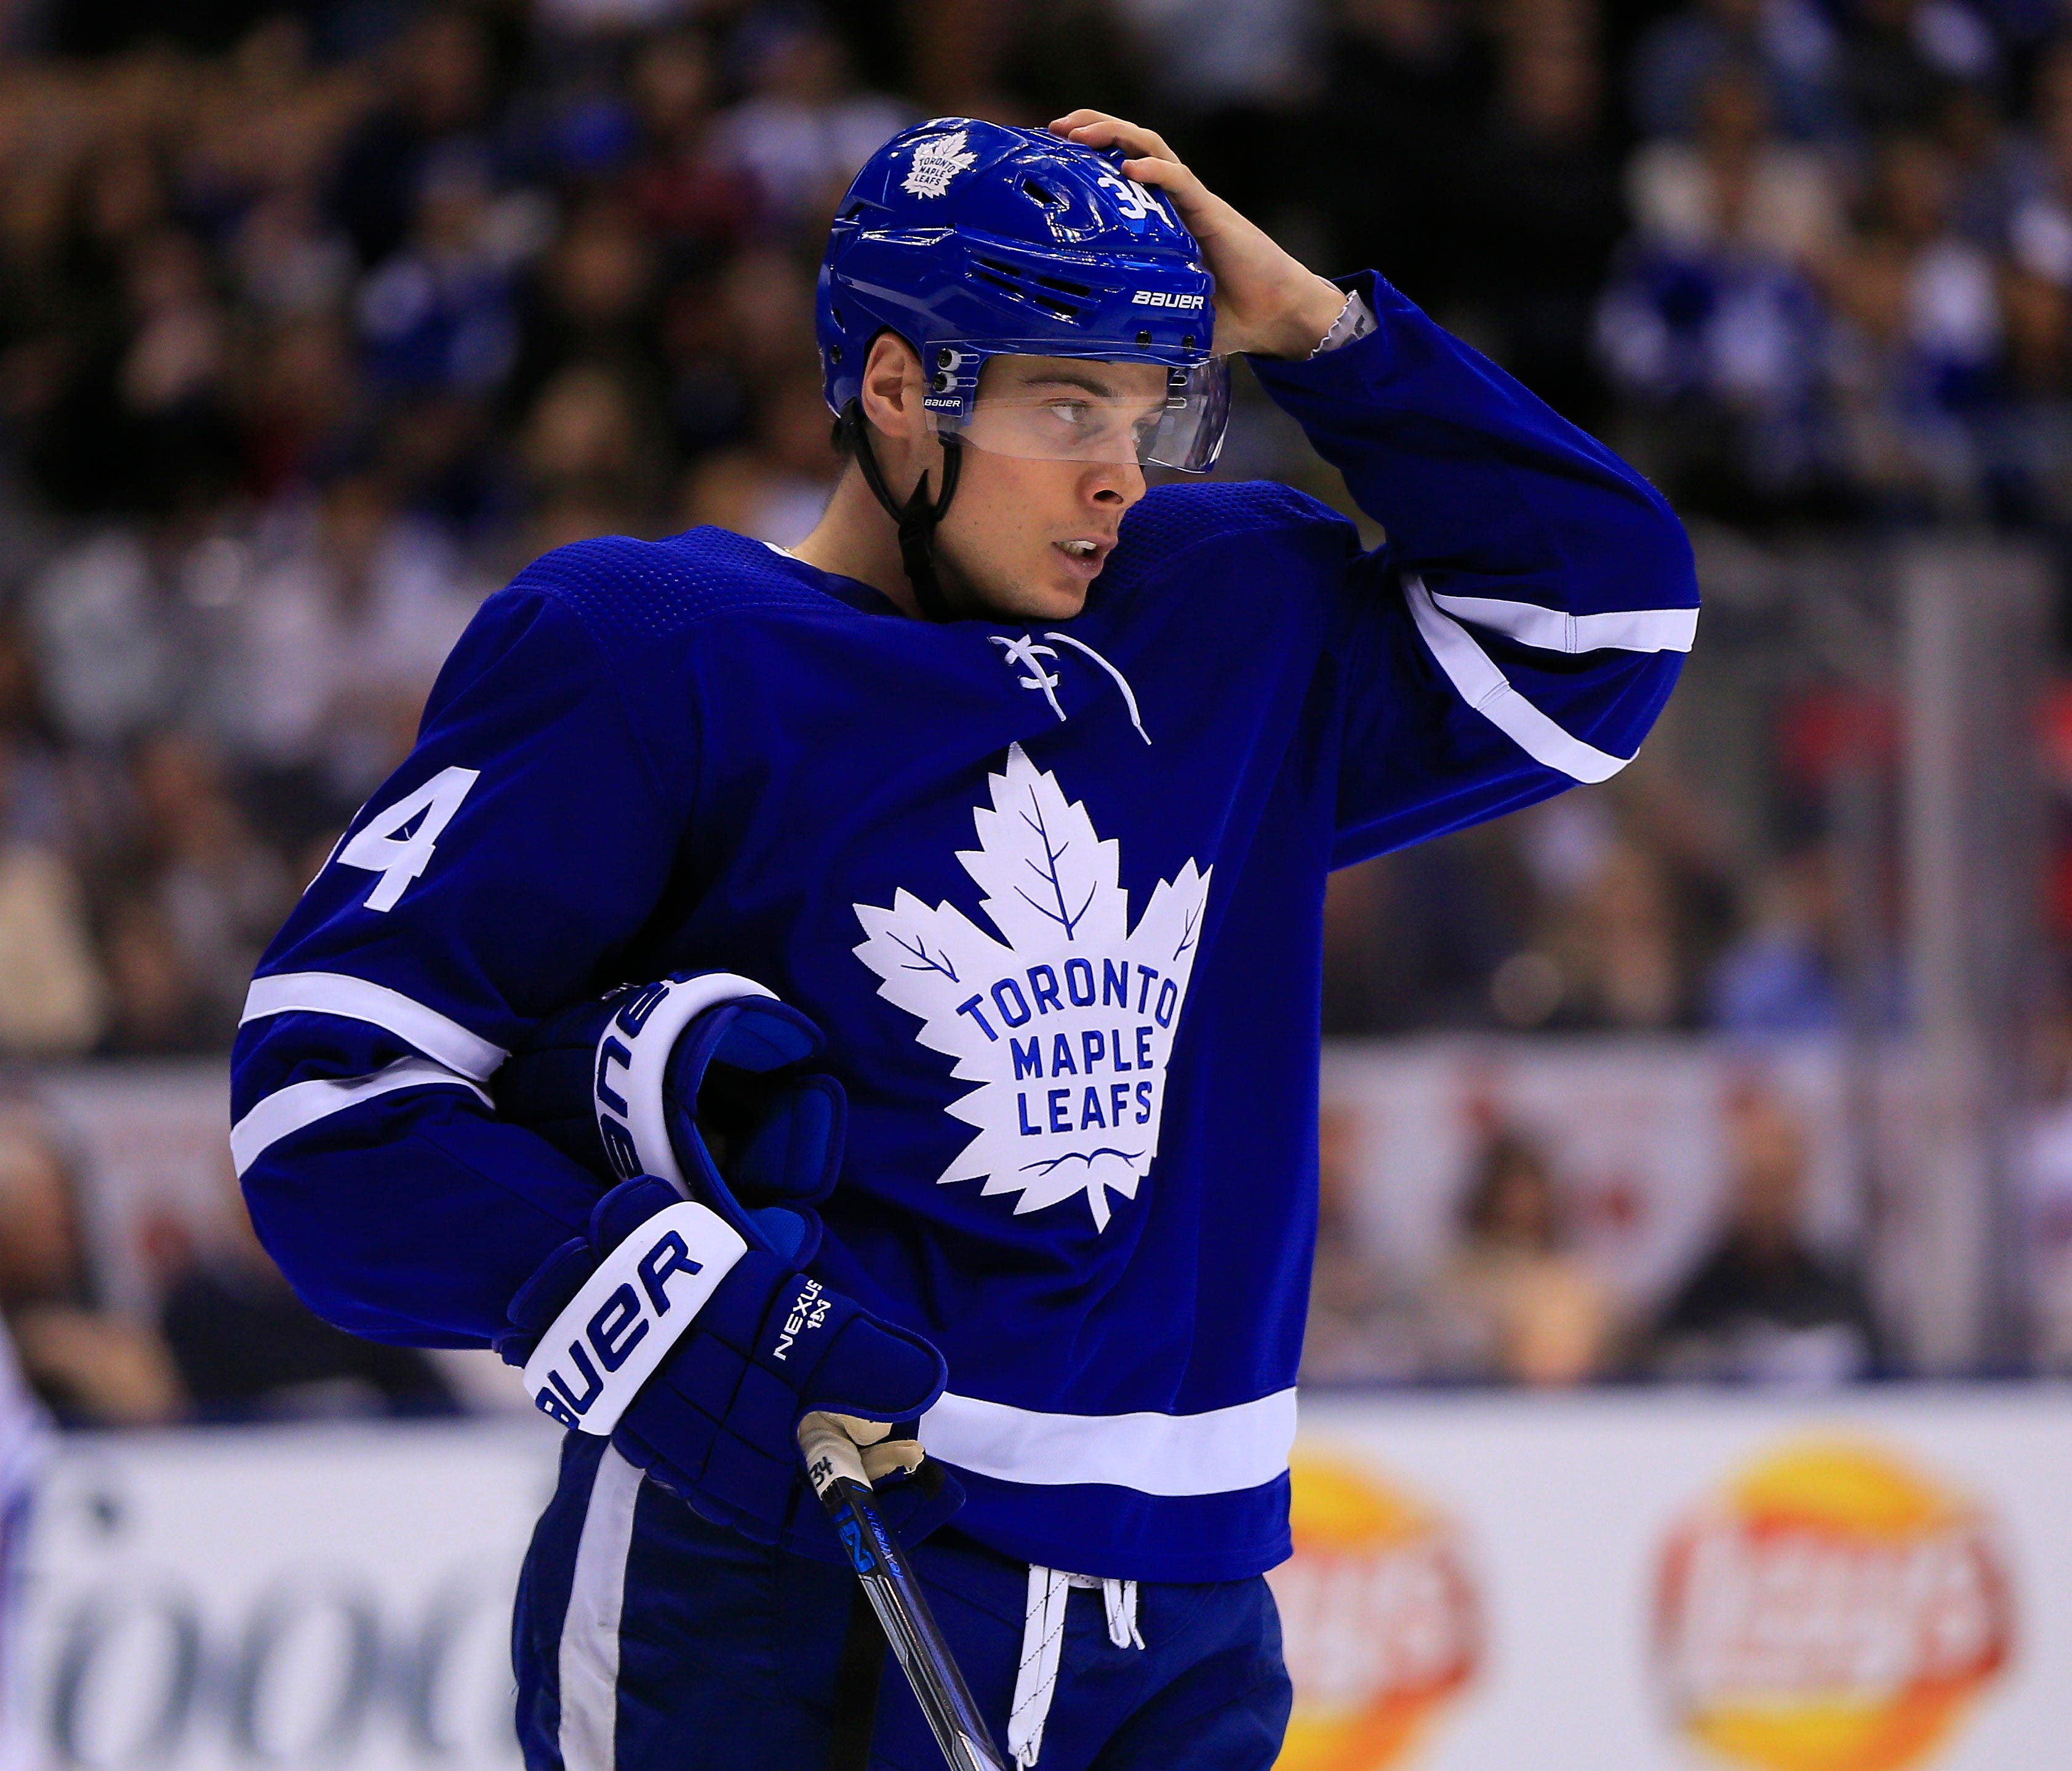 Toronto Maple Leafs forward Auston Matthews has gotten a point in 10 consecutive games.